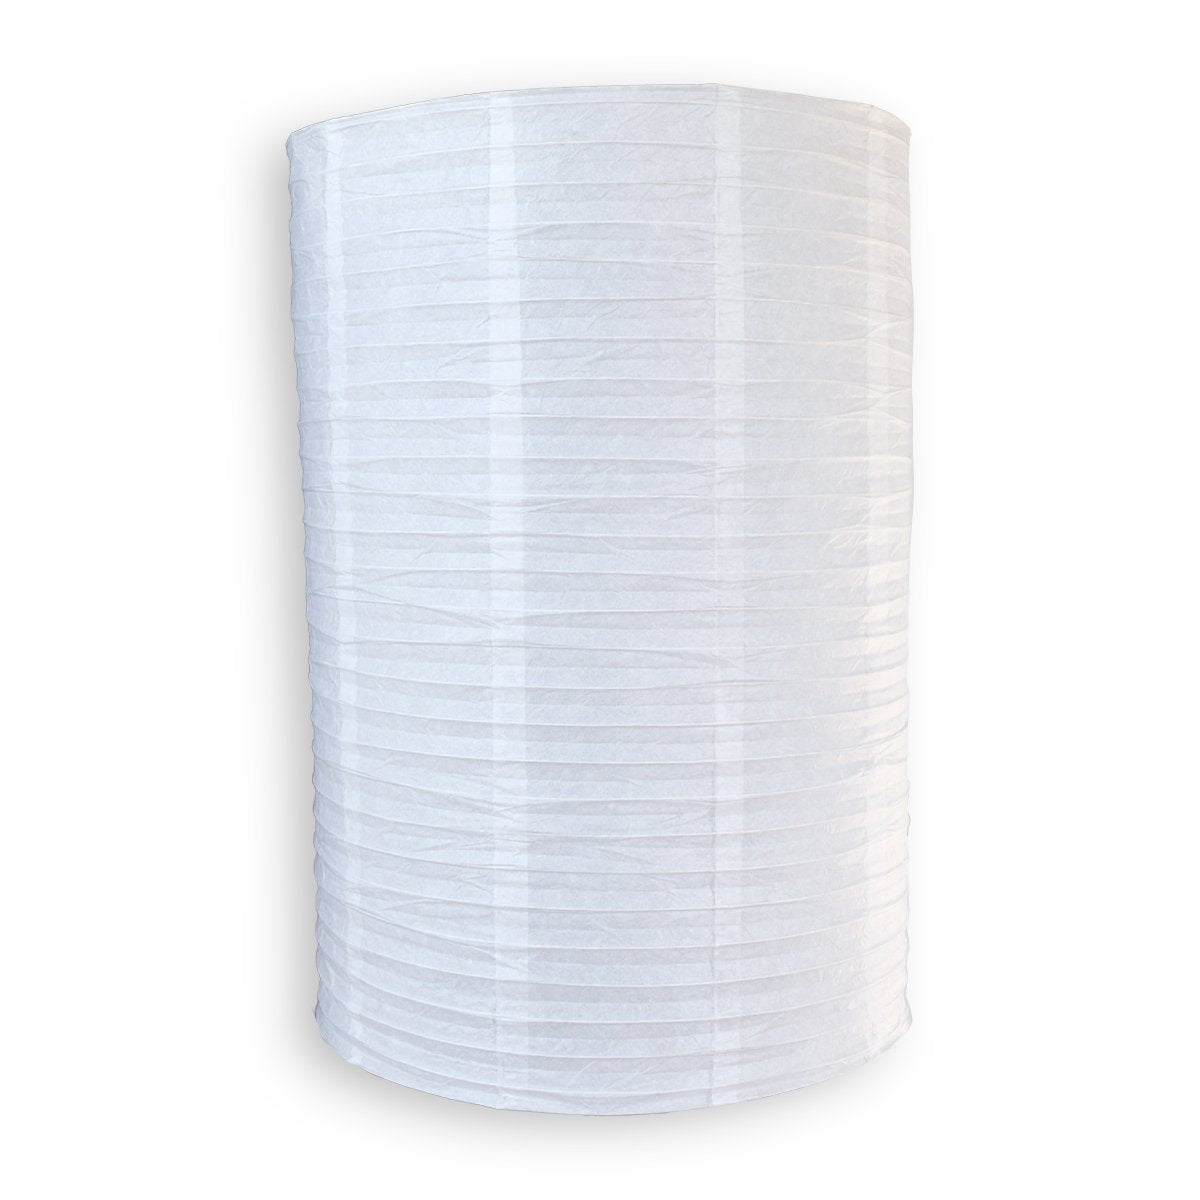 White Cylinder Unique Shaped Paper Lantern, 20-inch x 30-inch